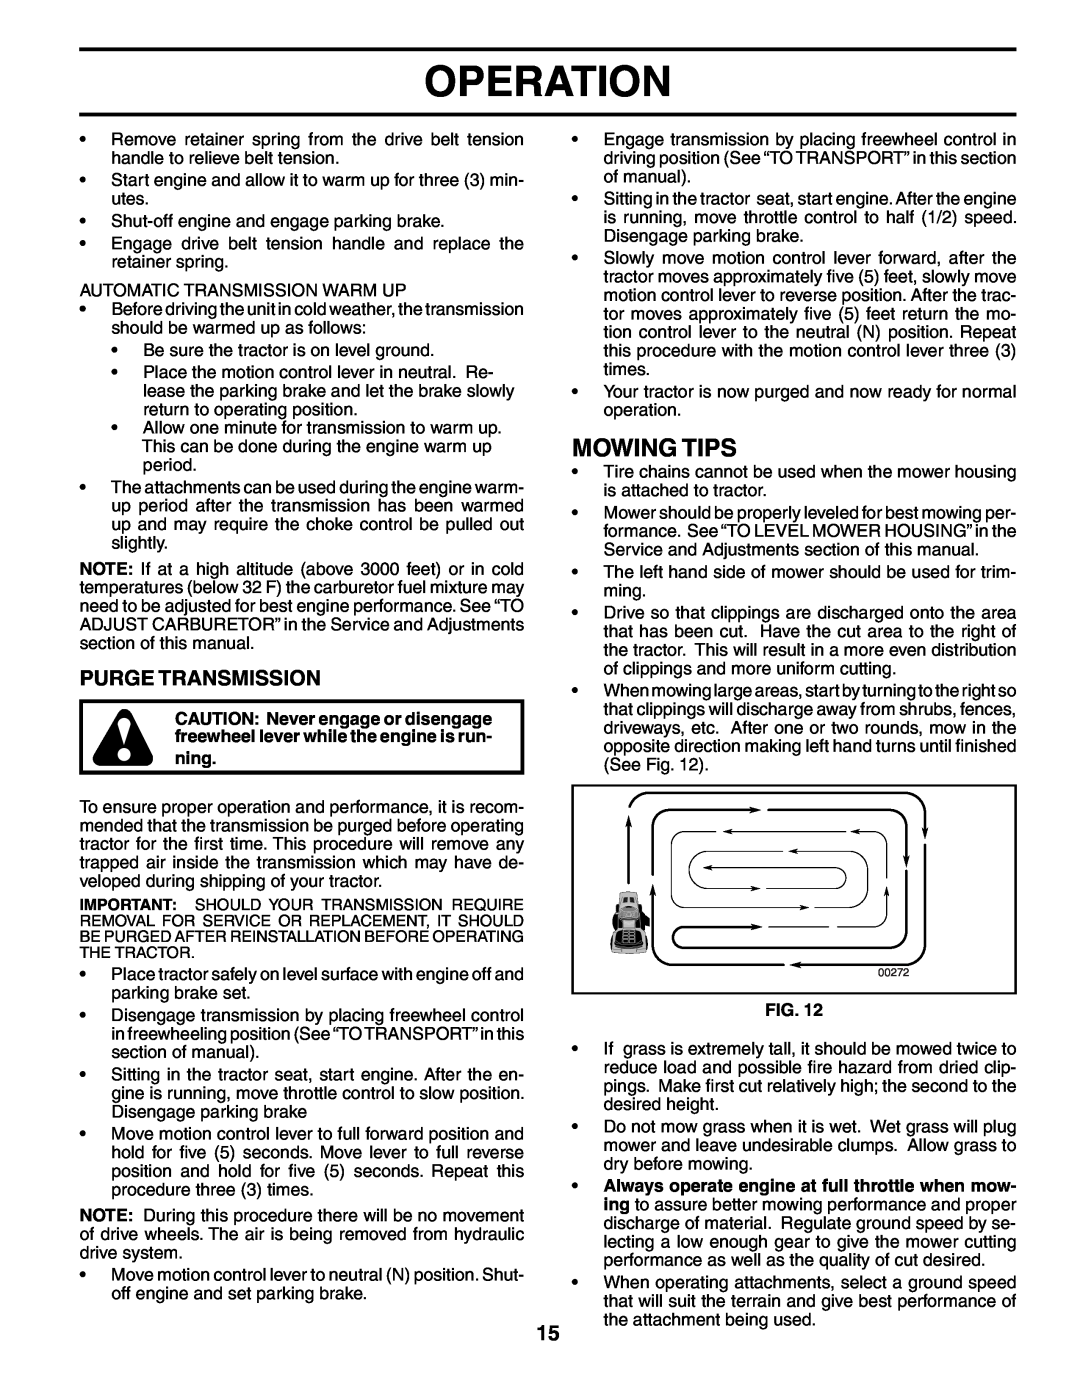 Poulan PDGT26H48C owner manual Mowing Tips, Purge Transmission, Operation 